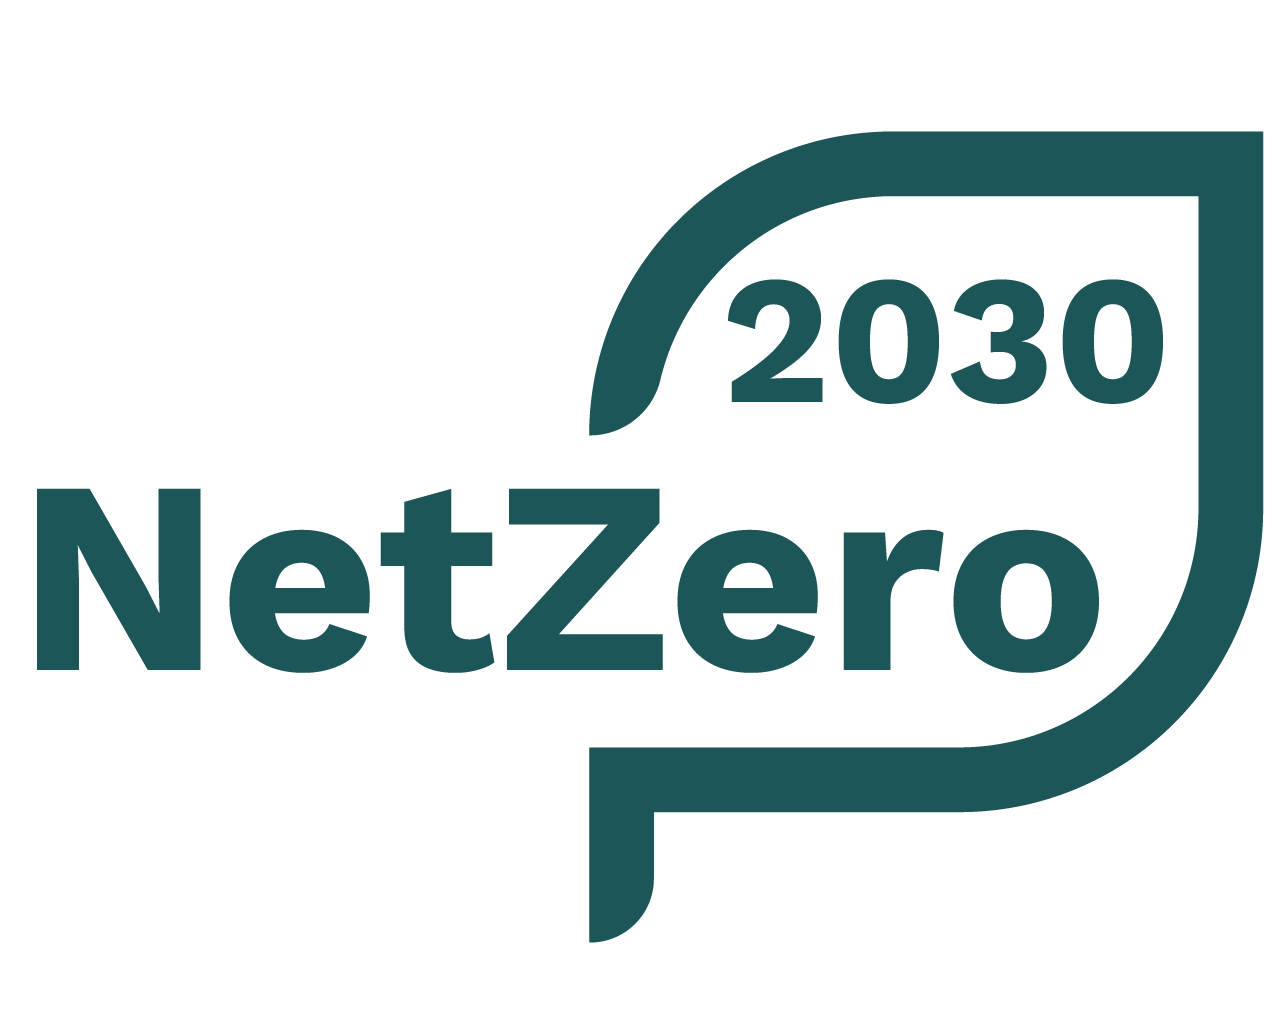 We are net zero in 2030.